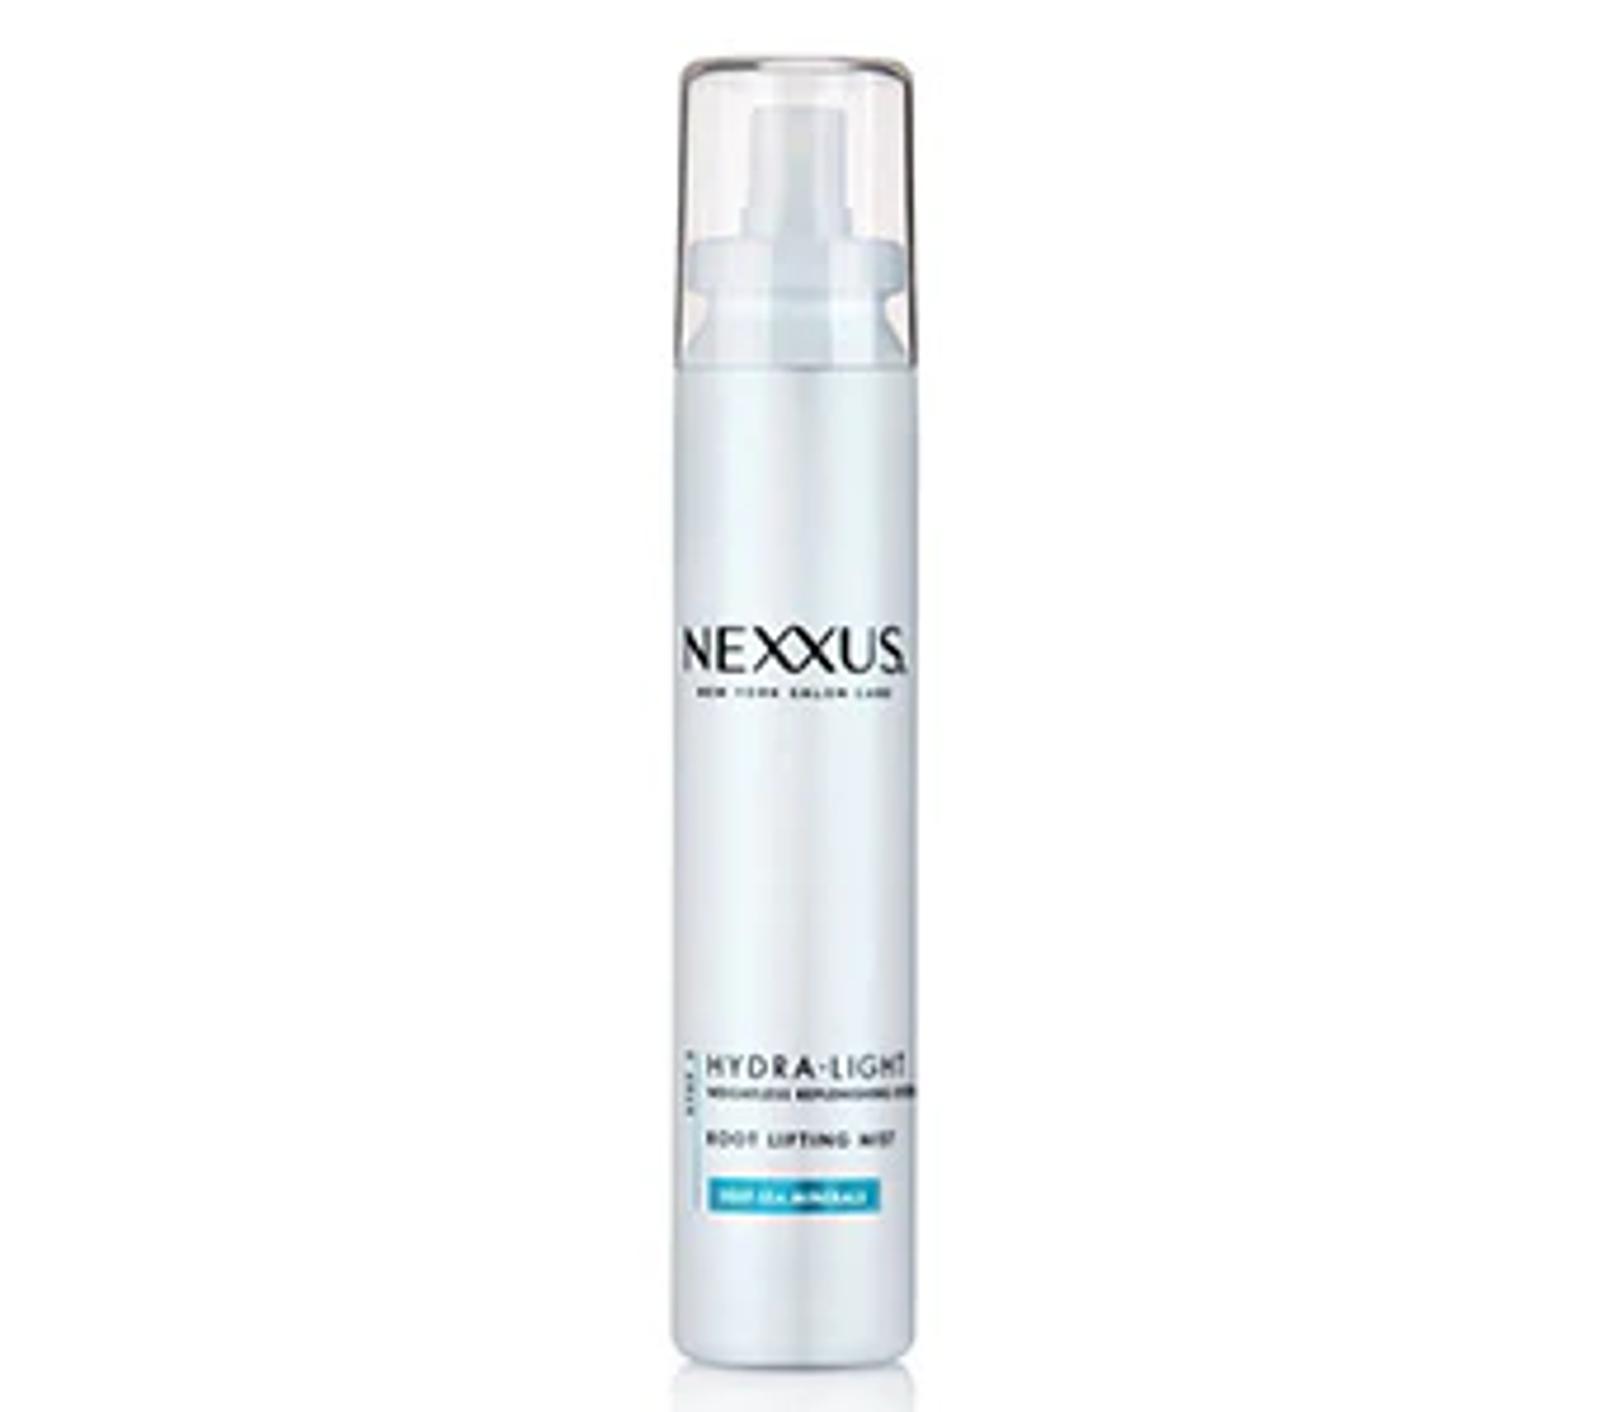 Product Shot of Nexxus New York Salon Care Hydra-Light Root Lift Mist